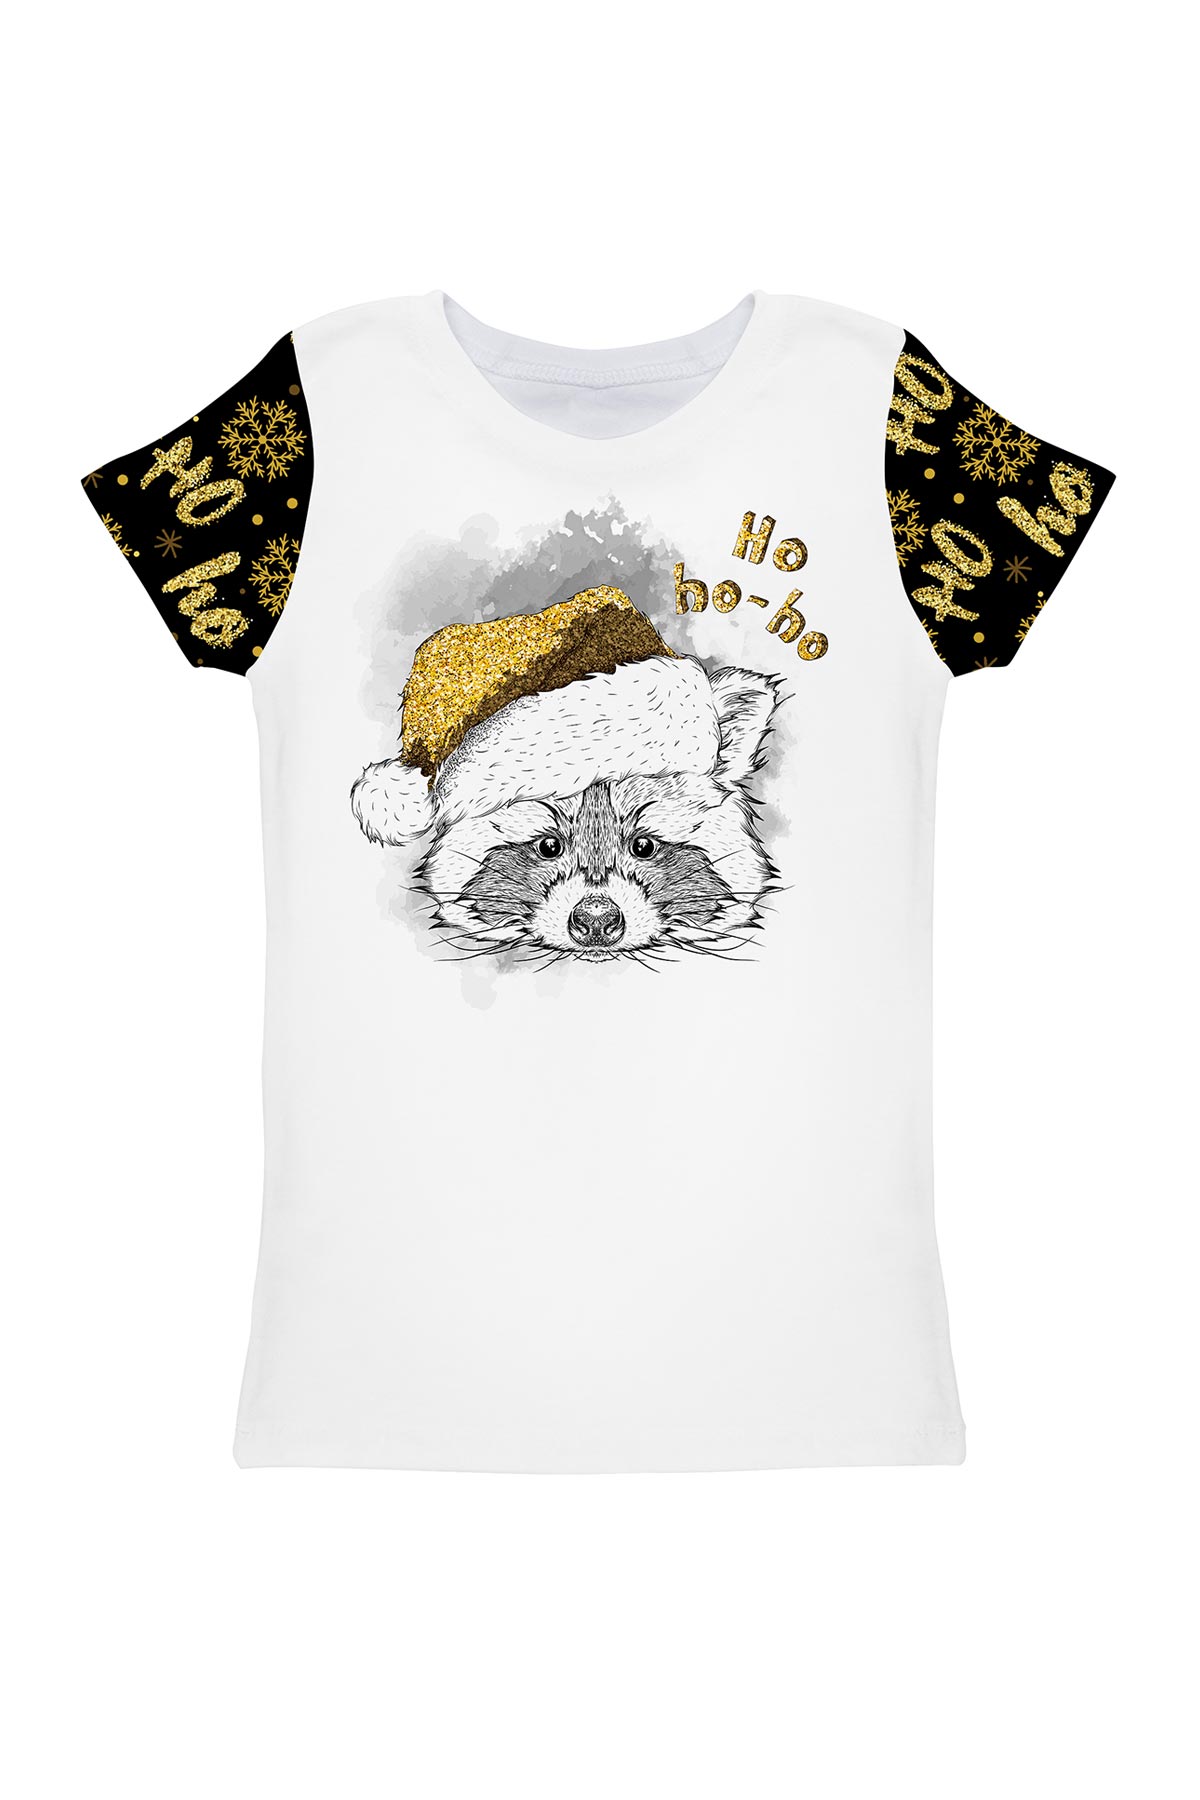 Hohoho Gold Zoe White & Black Racoon Print Designer T-Shirt - Girls - Pineapple Clothing